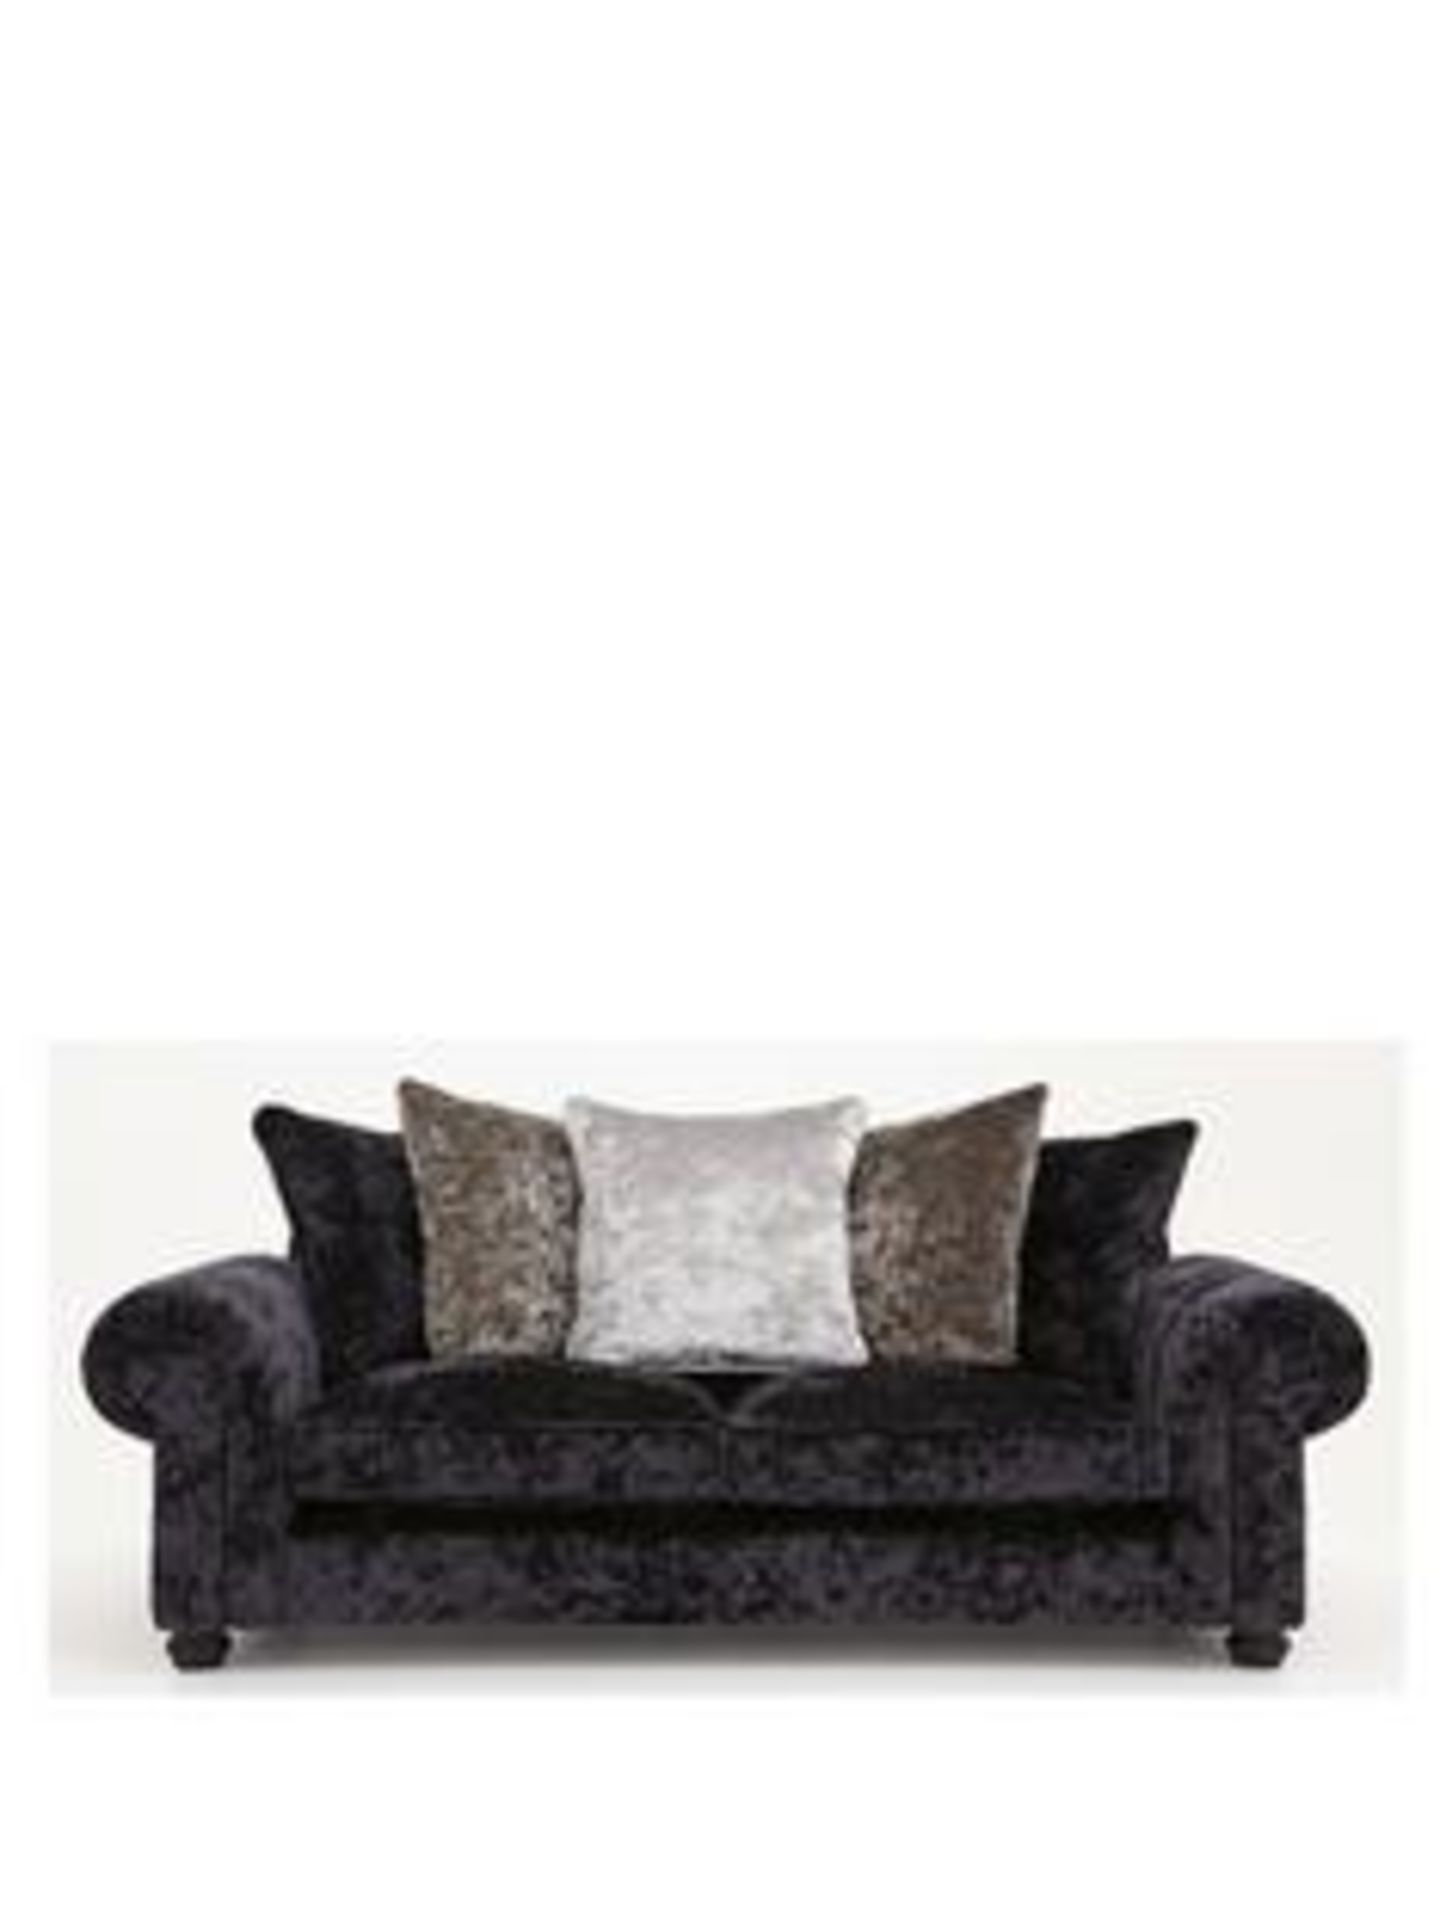 Scarpa deluxe 3 seater sofa in black shimmer crushed velvet - Image 2 of 2